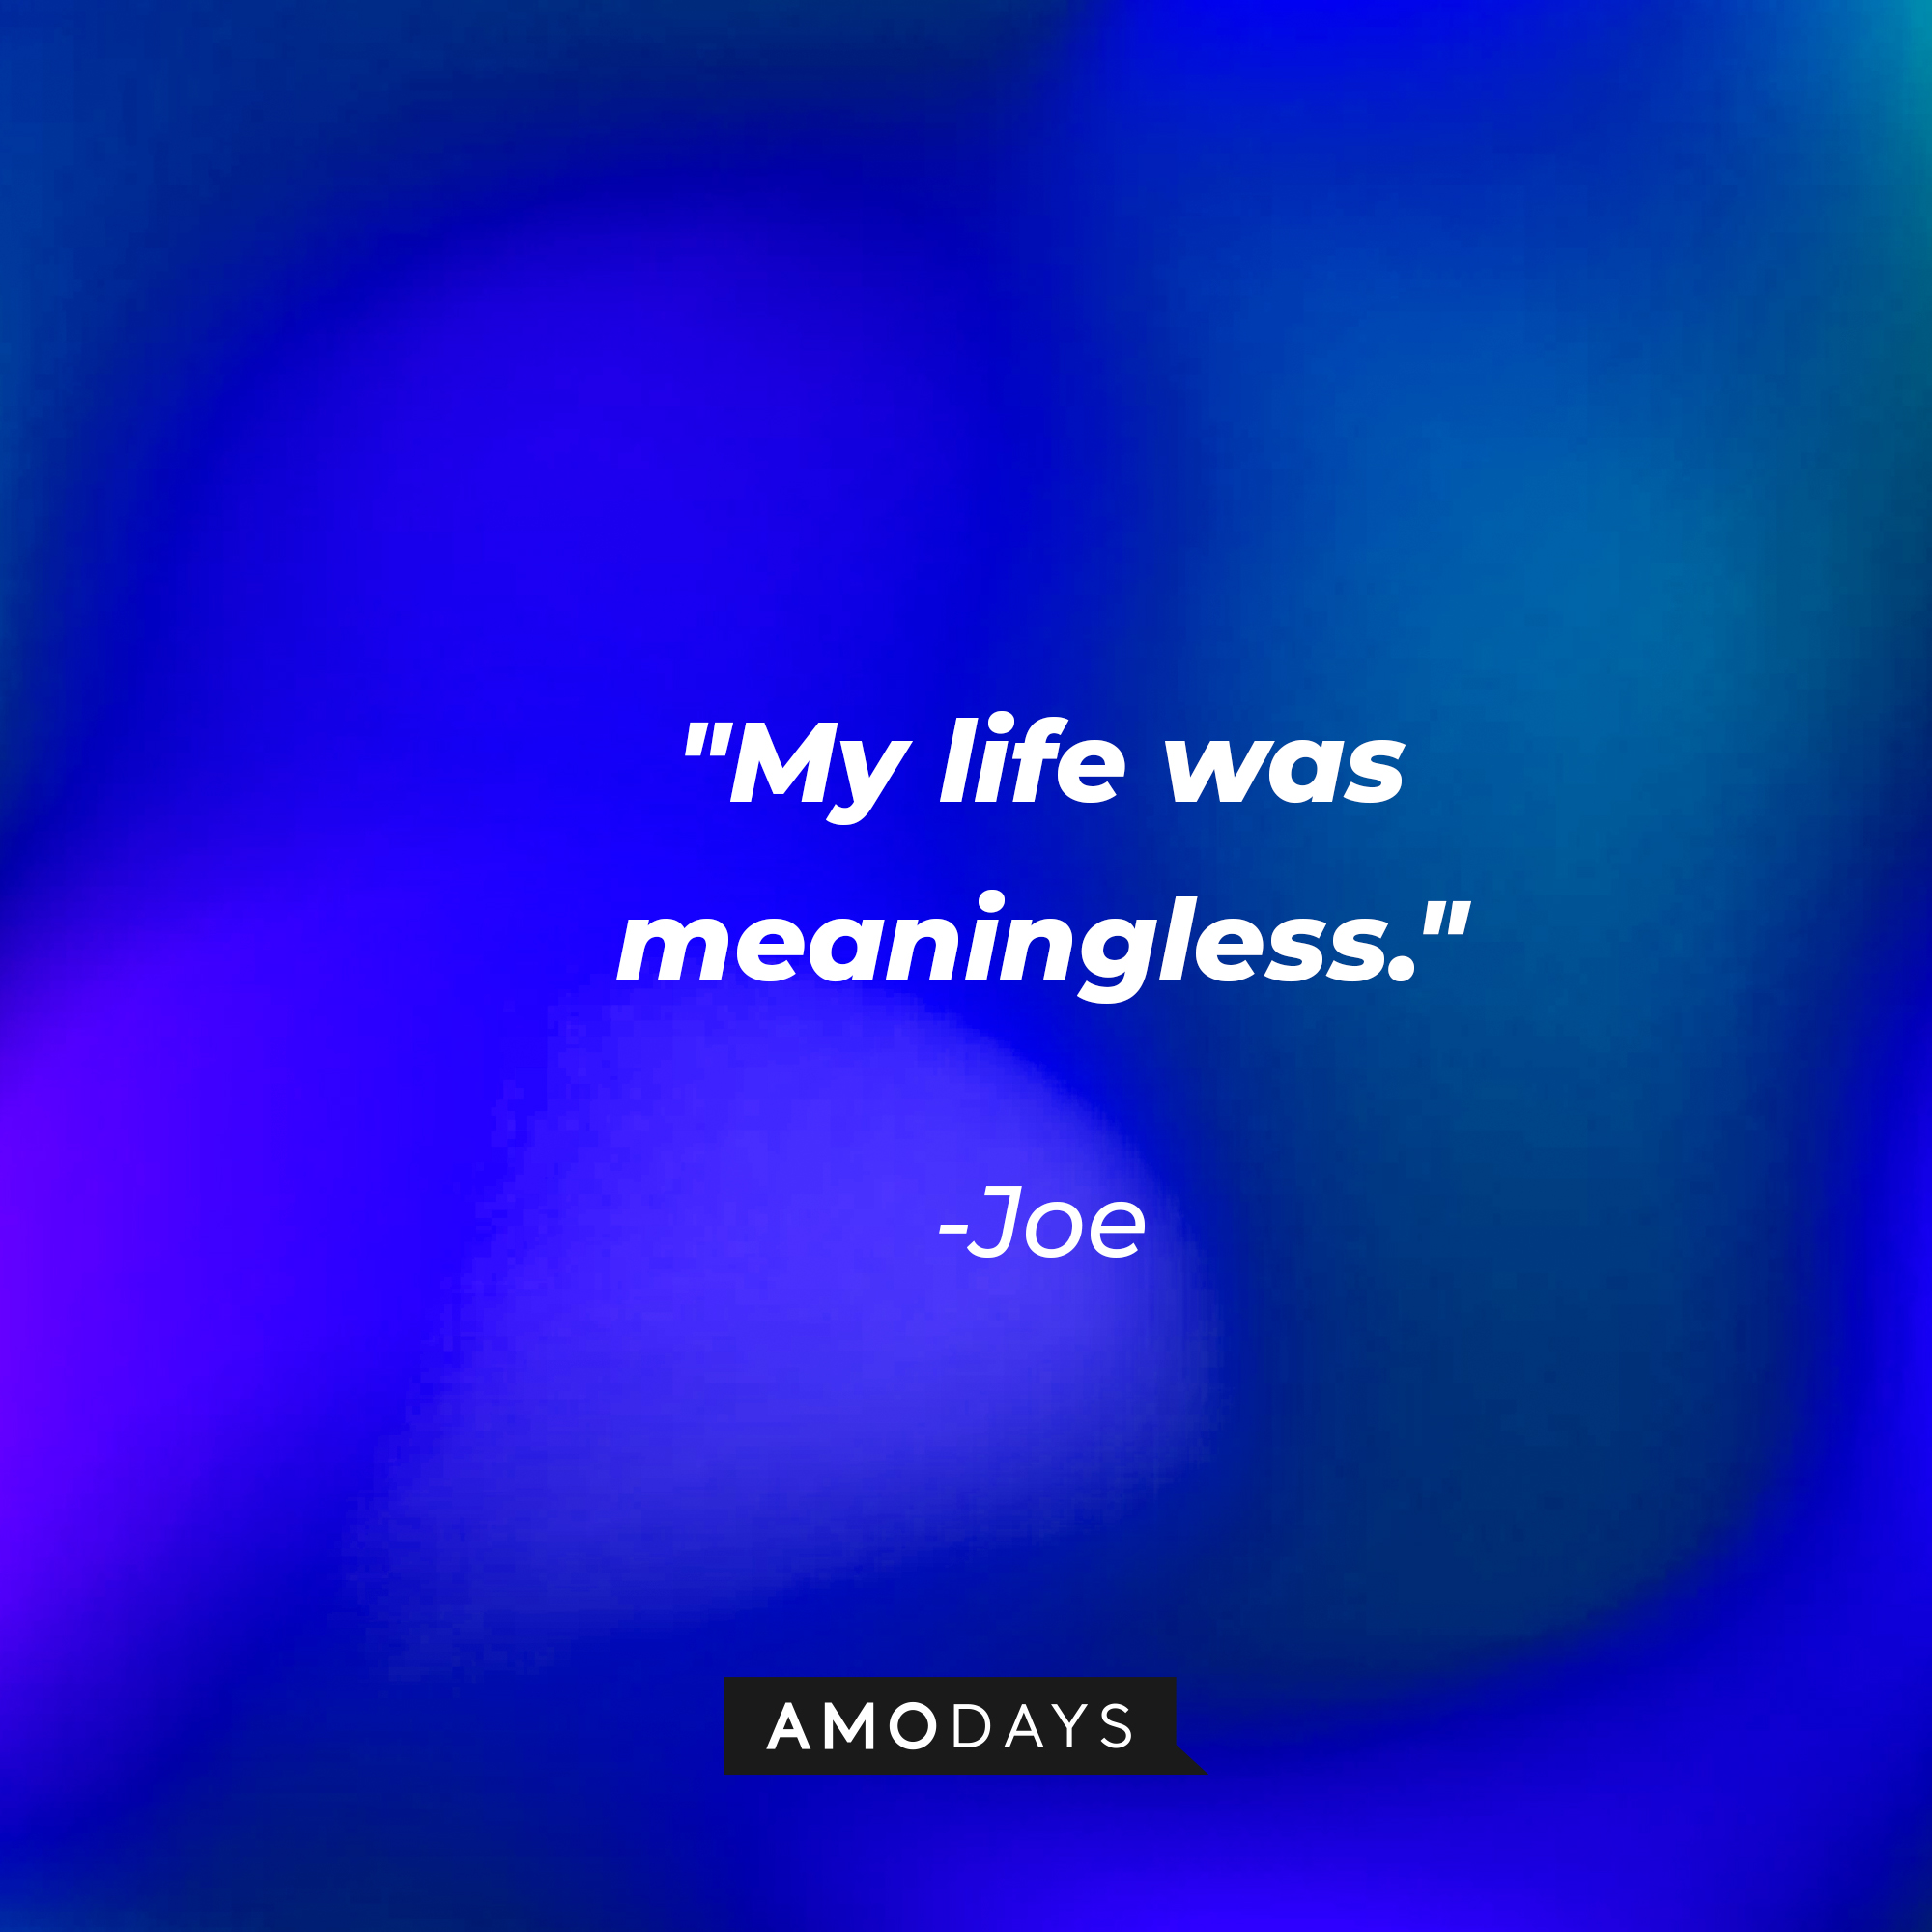 Joe's quote: "My life was meaningless."  | Source: youtube.com/pixar